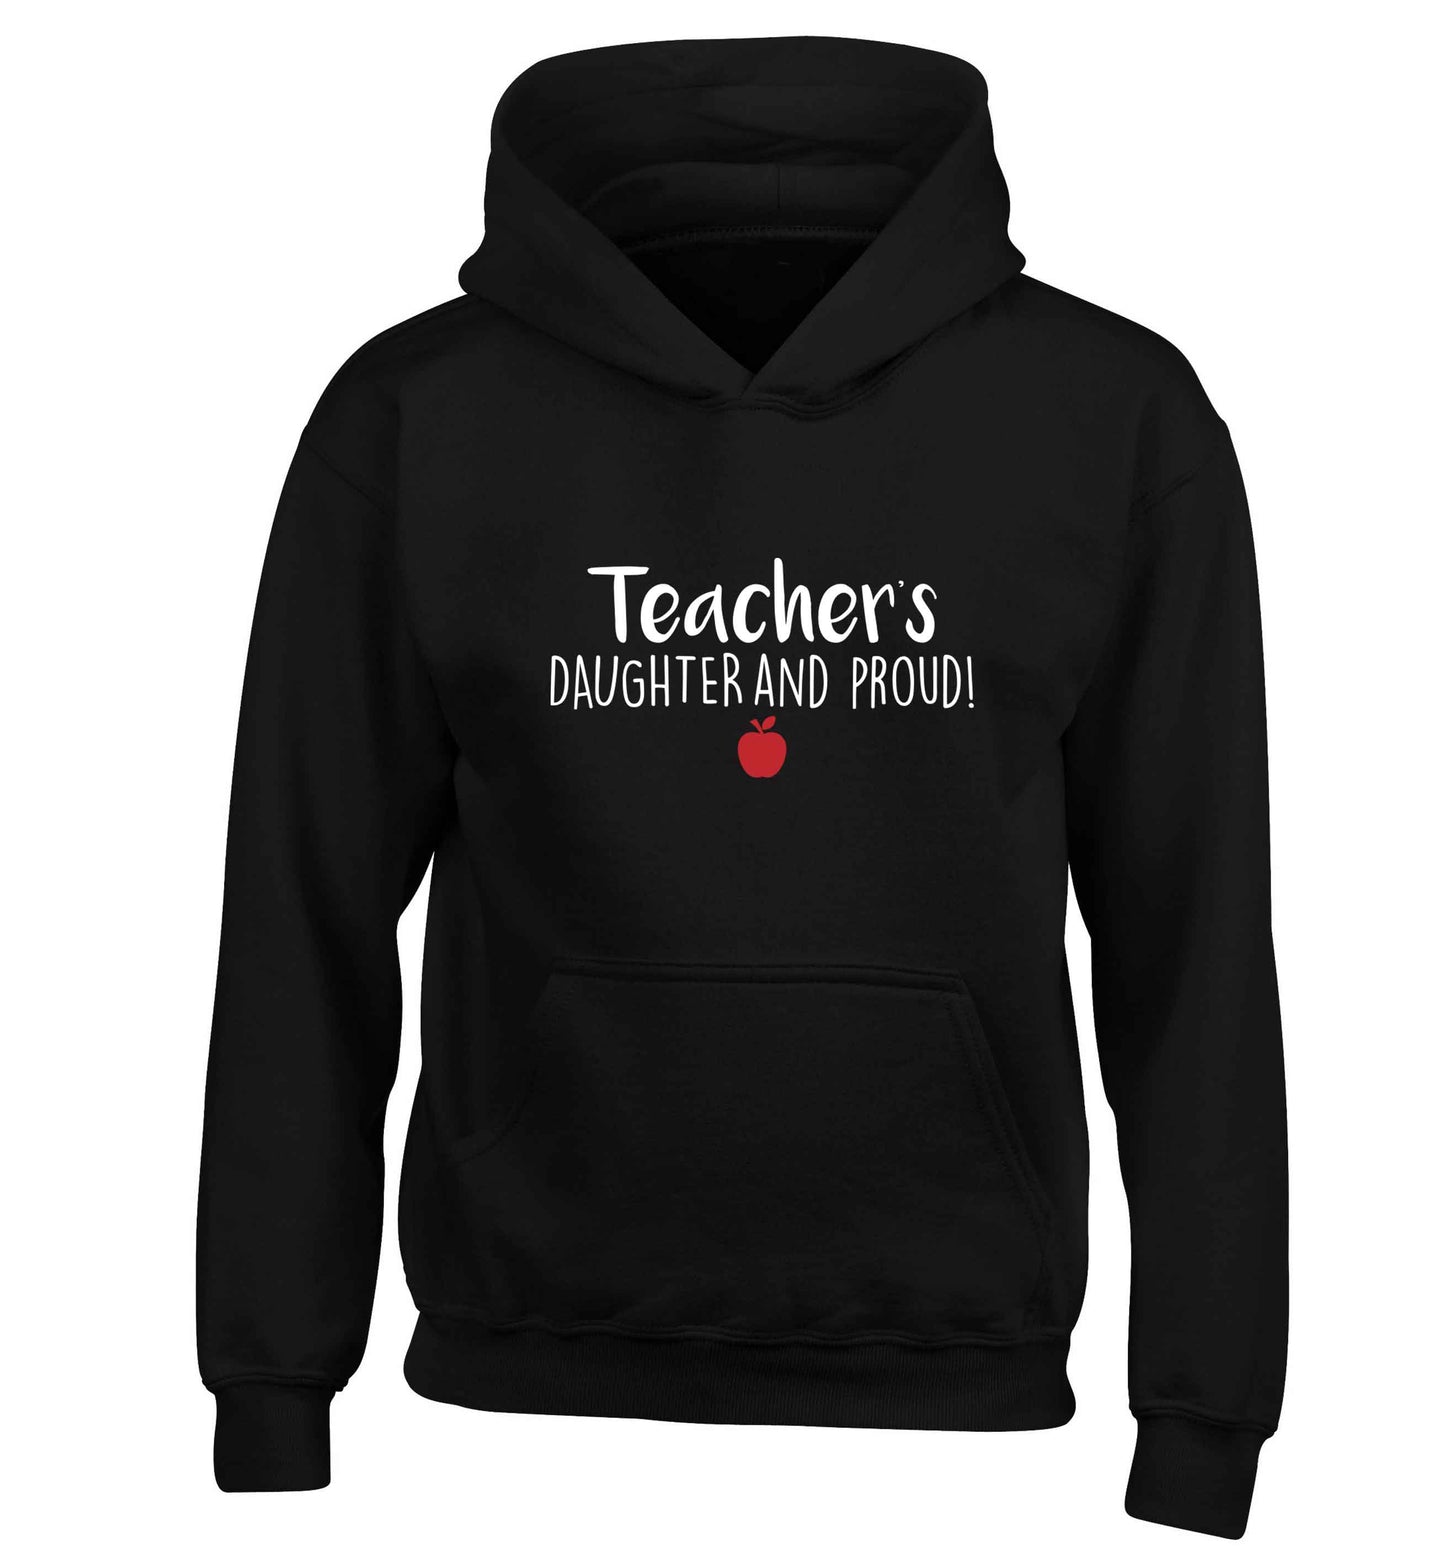 Teachers daughter and proud children's black hoodie 12-13 Years